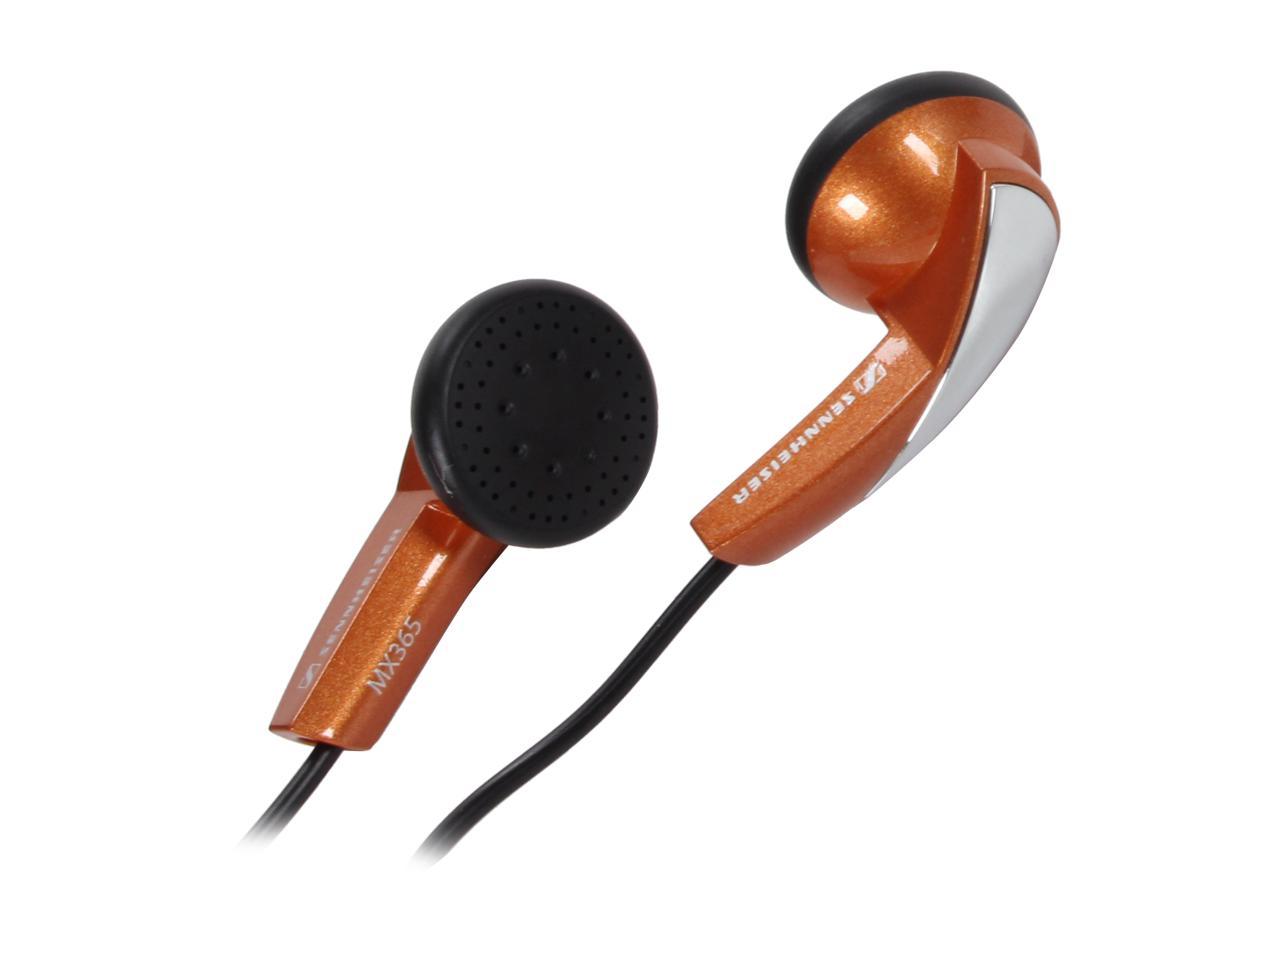 Sennheiser MX-365 Stereo Earbud Headphone